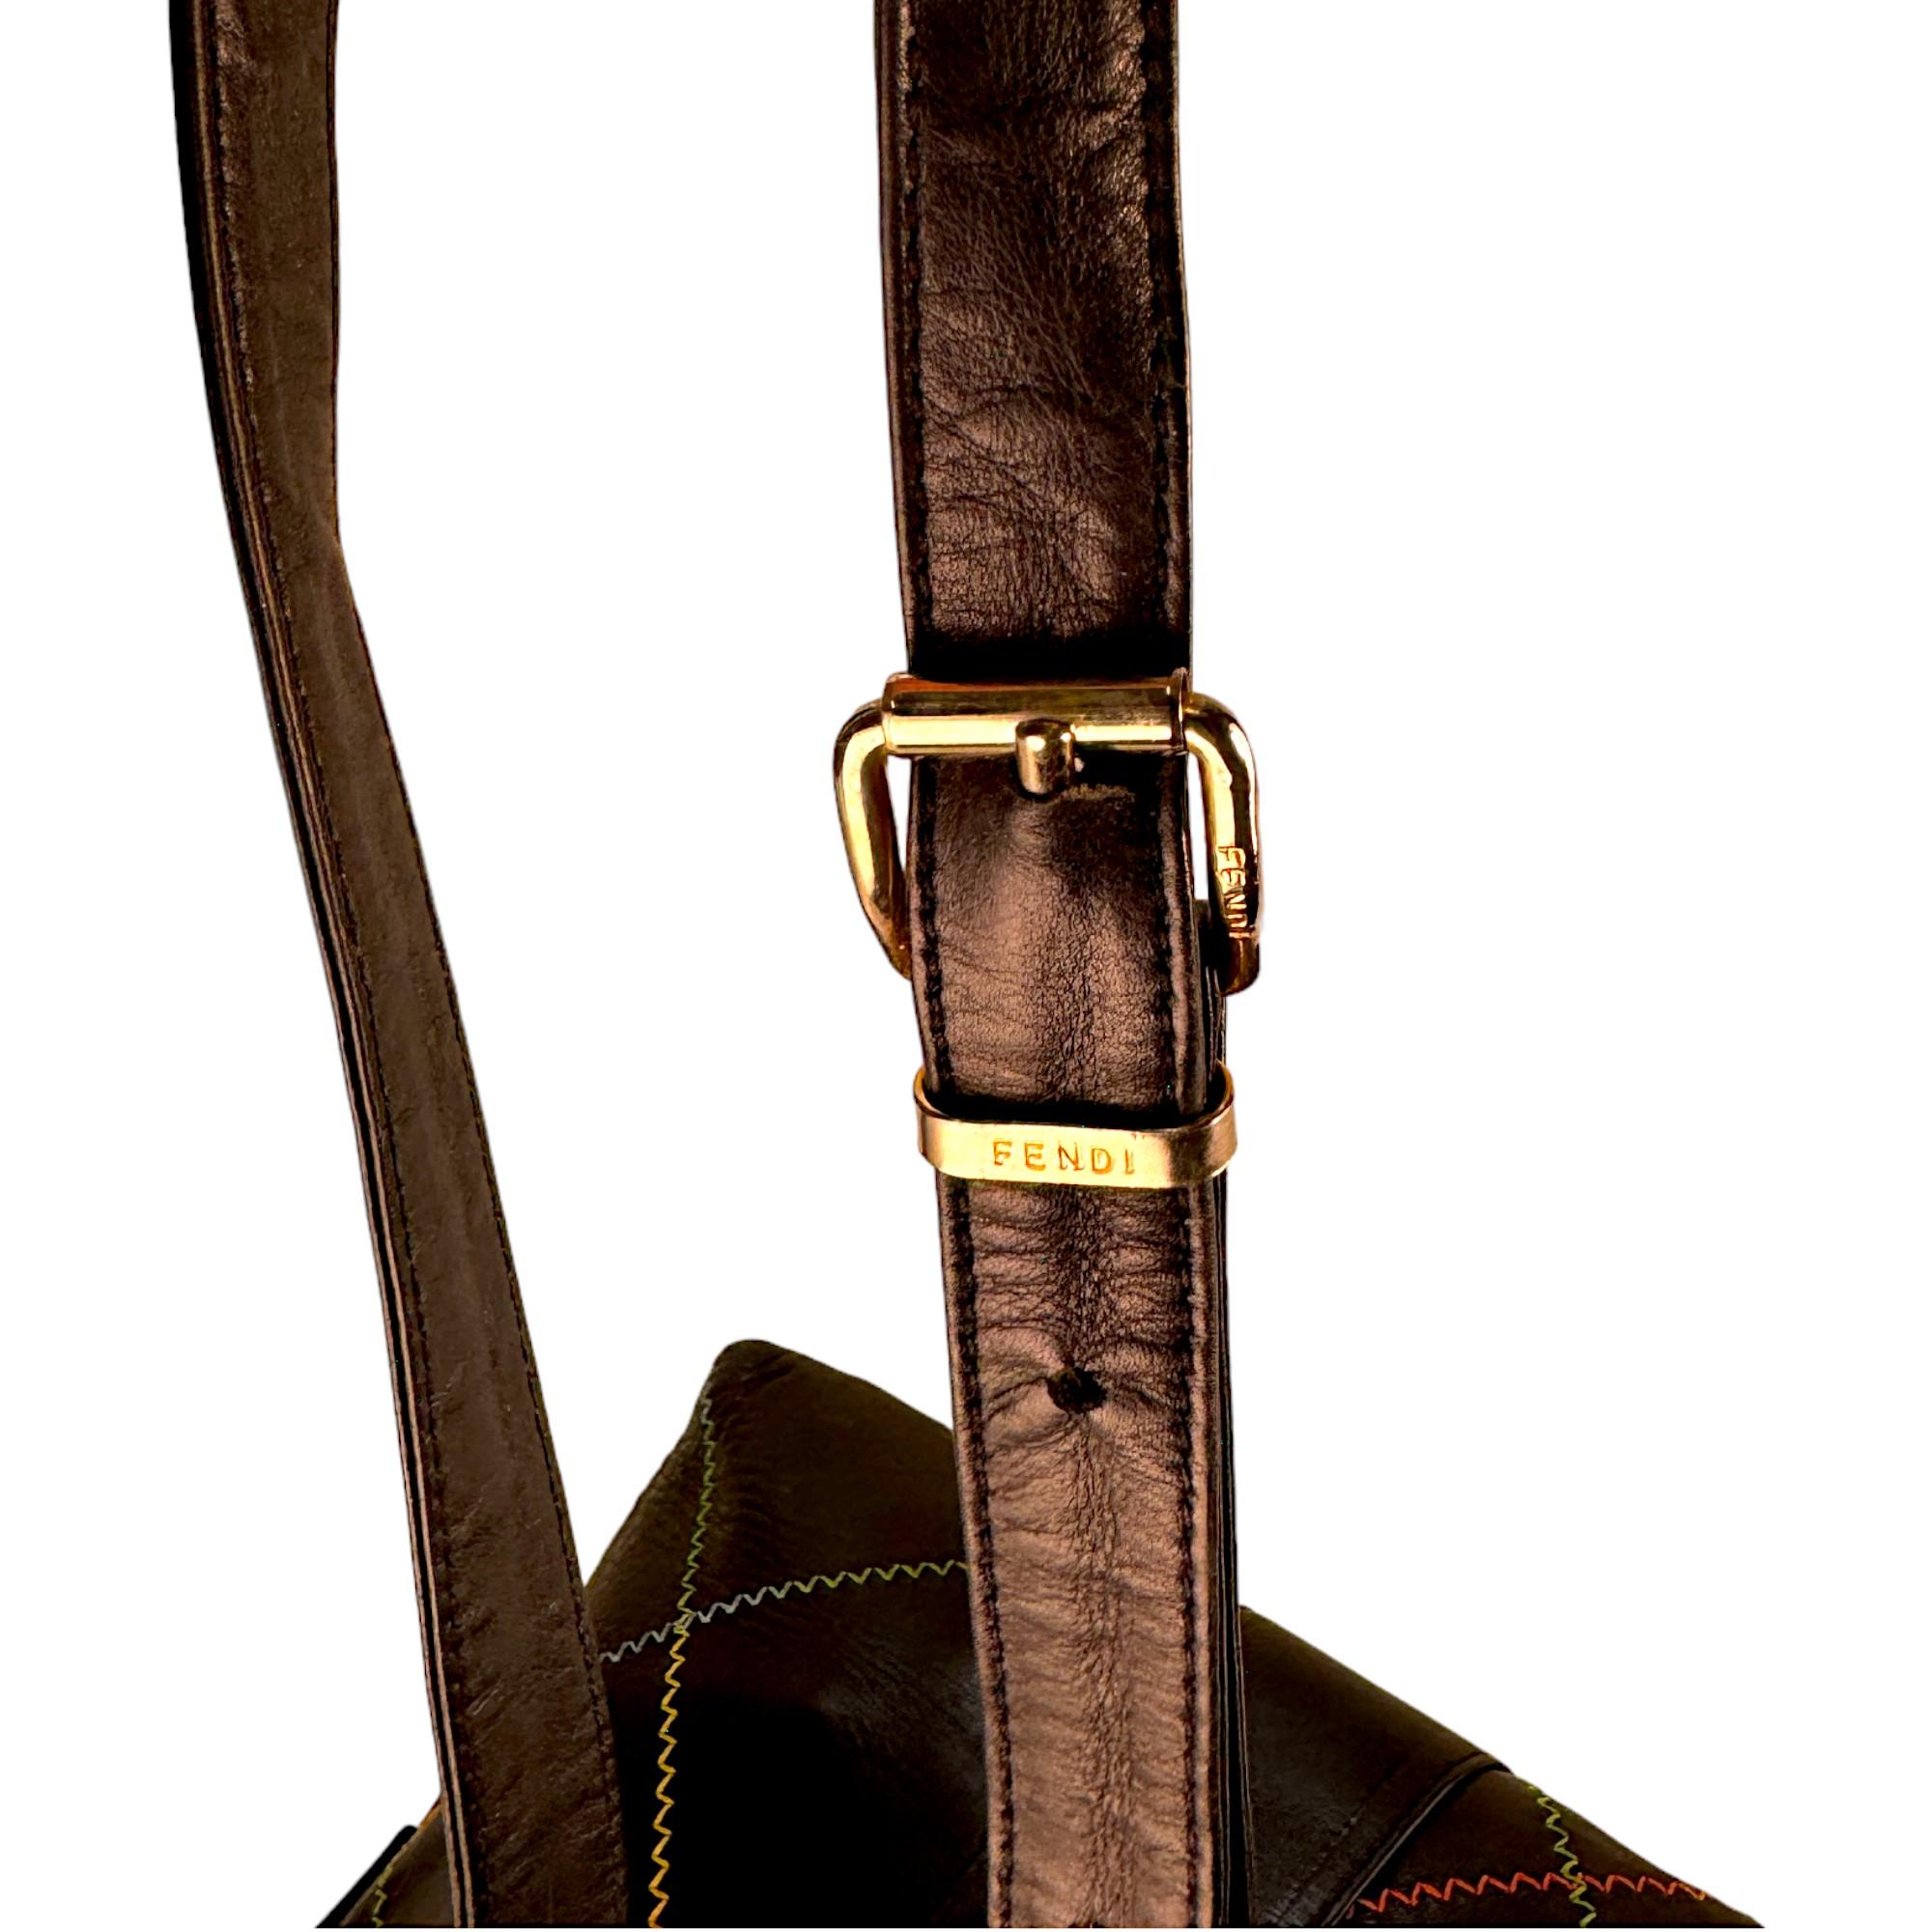 Authentic estate Fendi Rainbow Stitch Black leather Crossbody bag